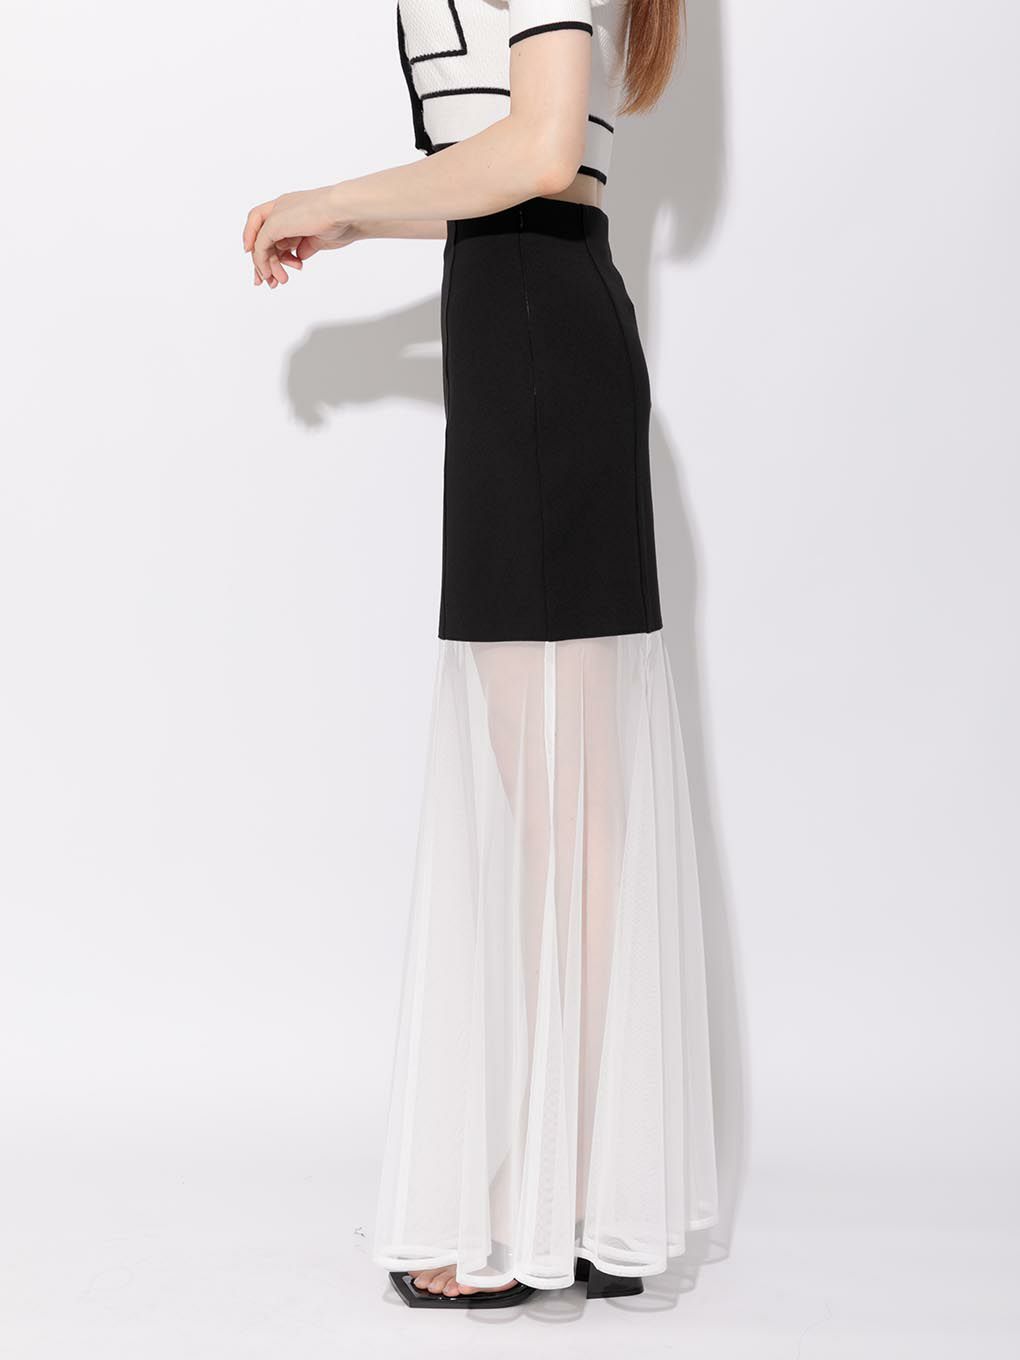 translucent skirt